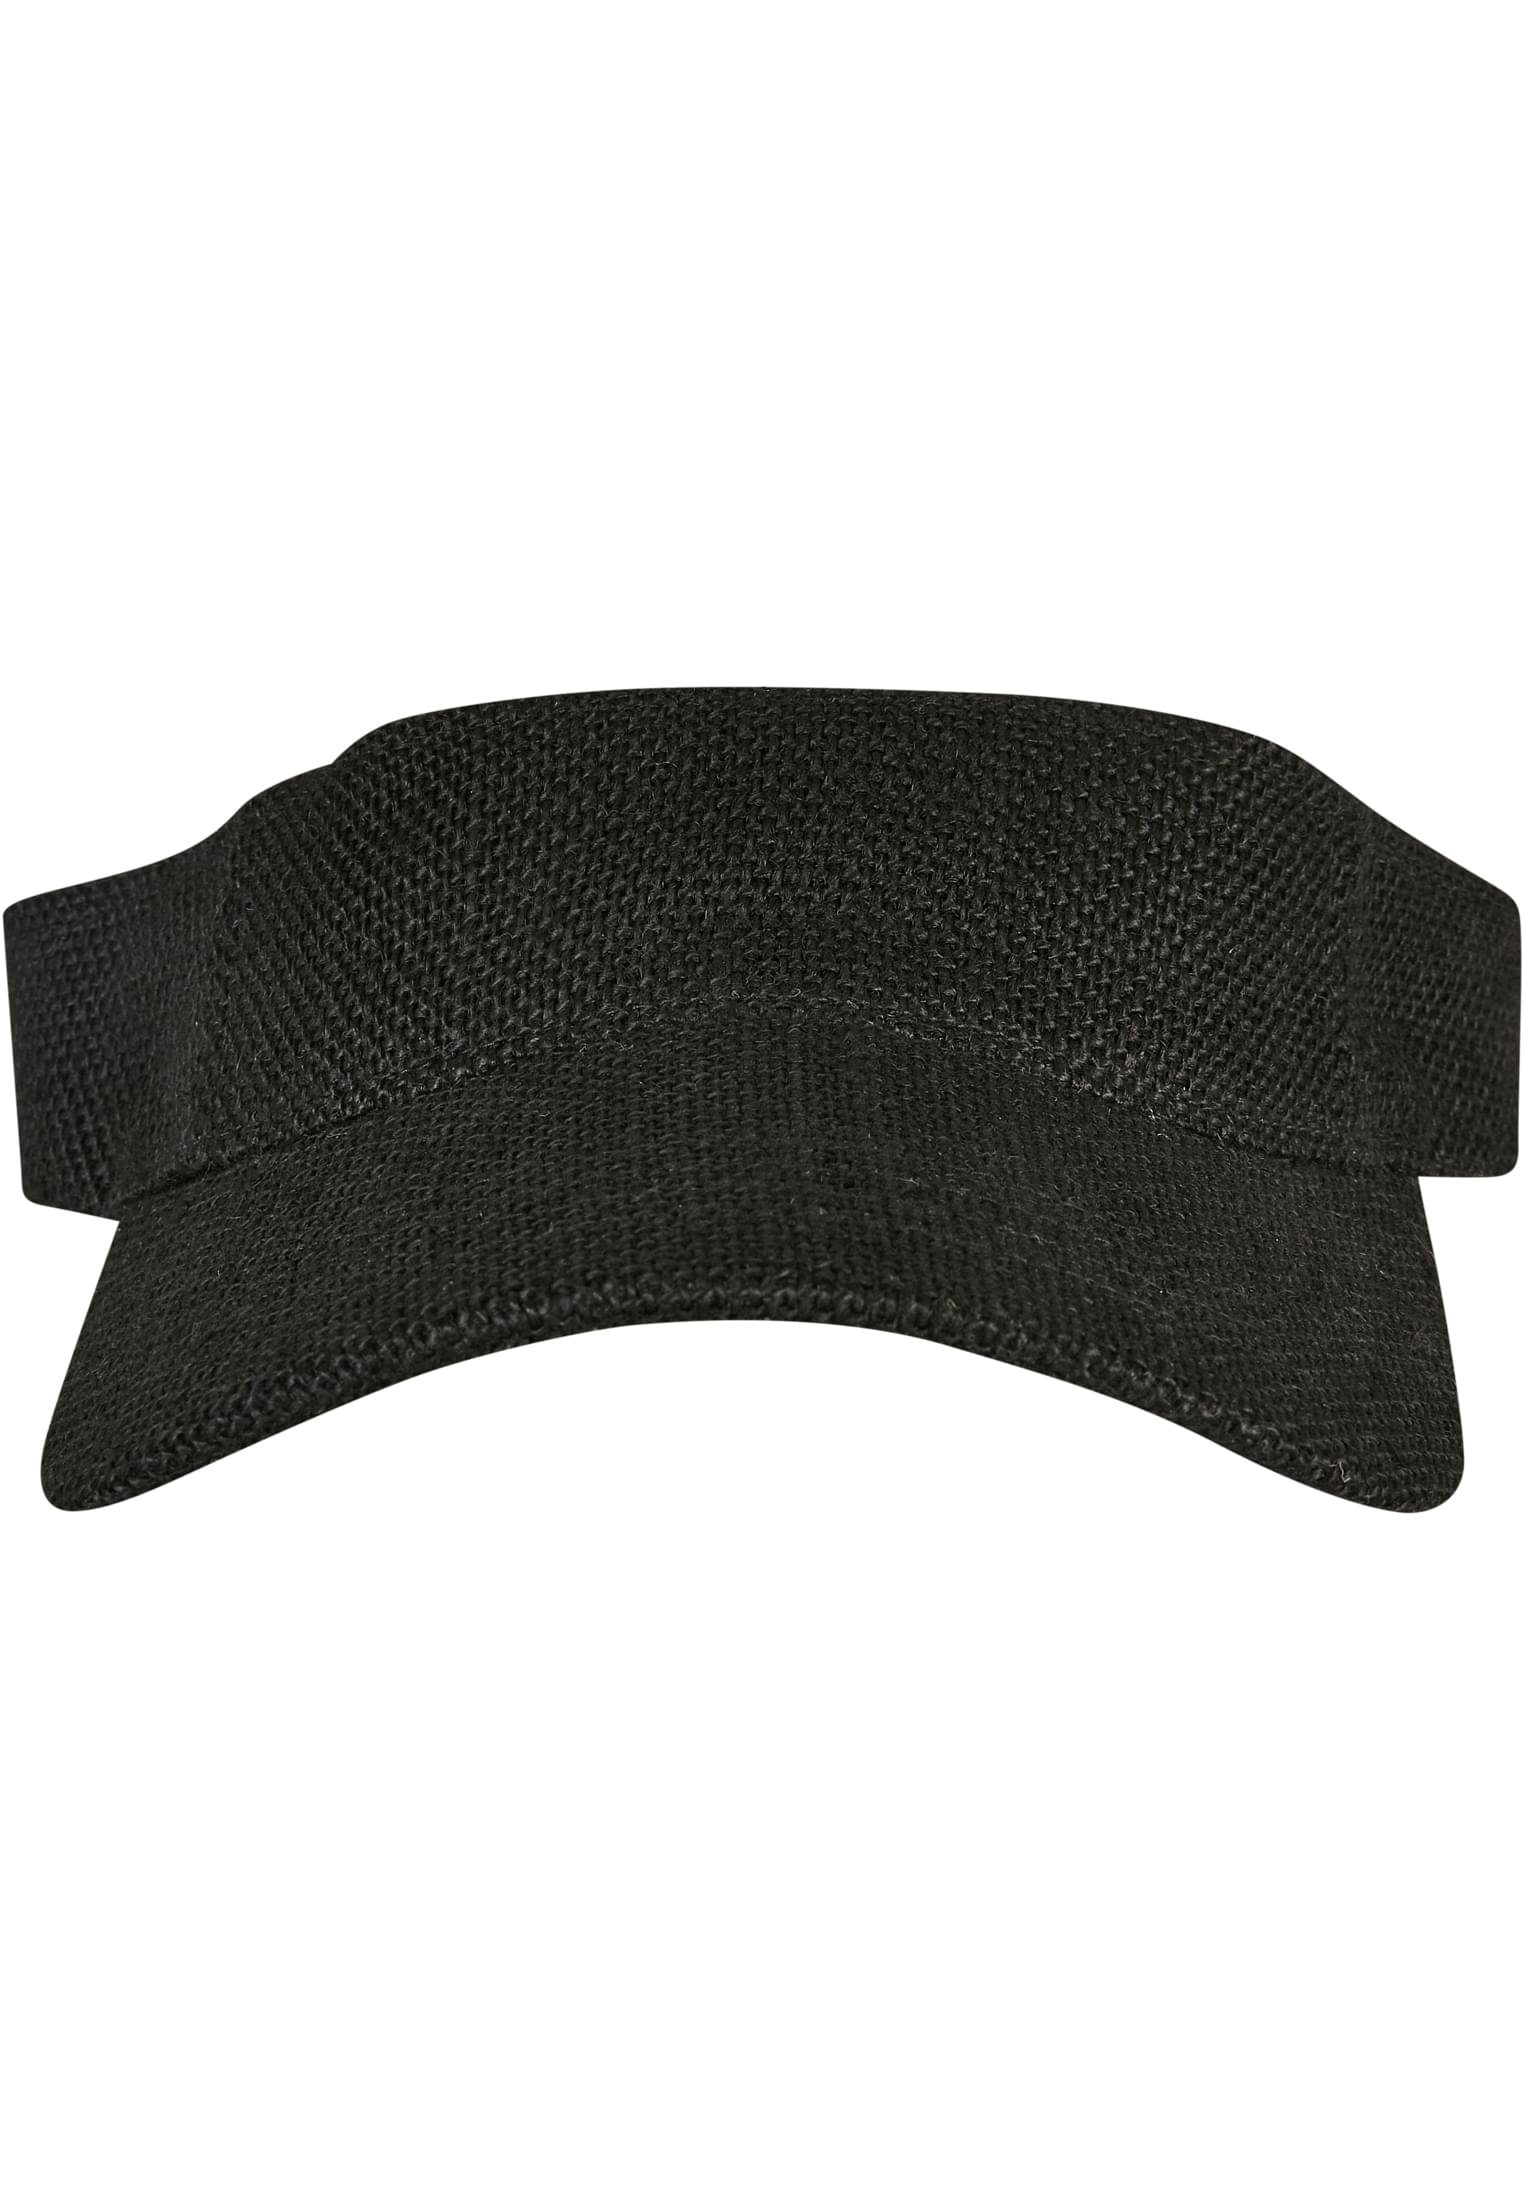 Cap black Cap Bast Flexfit Visor Flex Accessoires